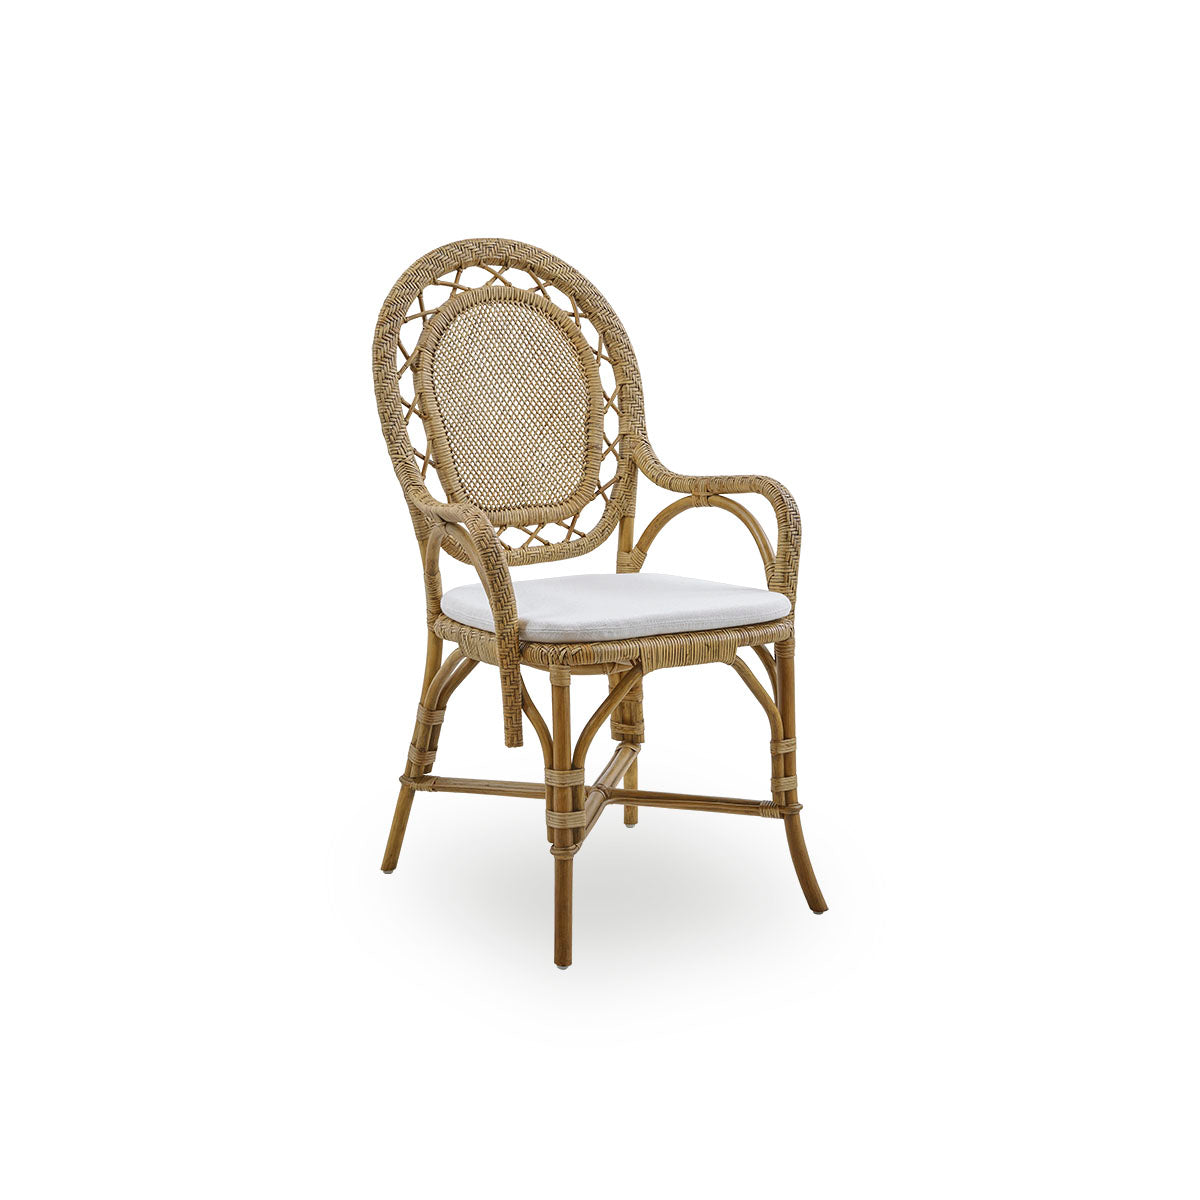 Seat cushion | Romantica Dining Chair